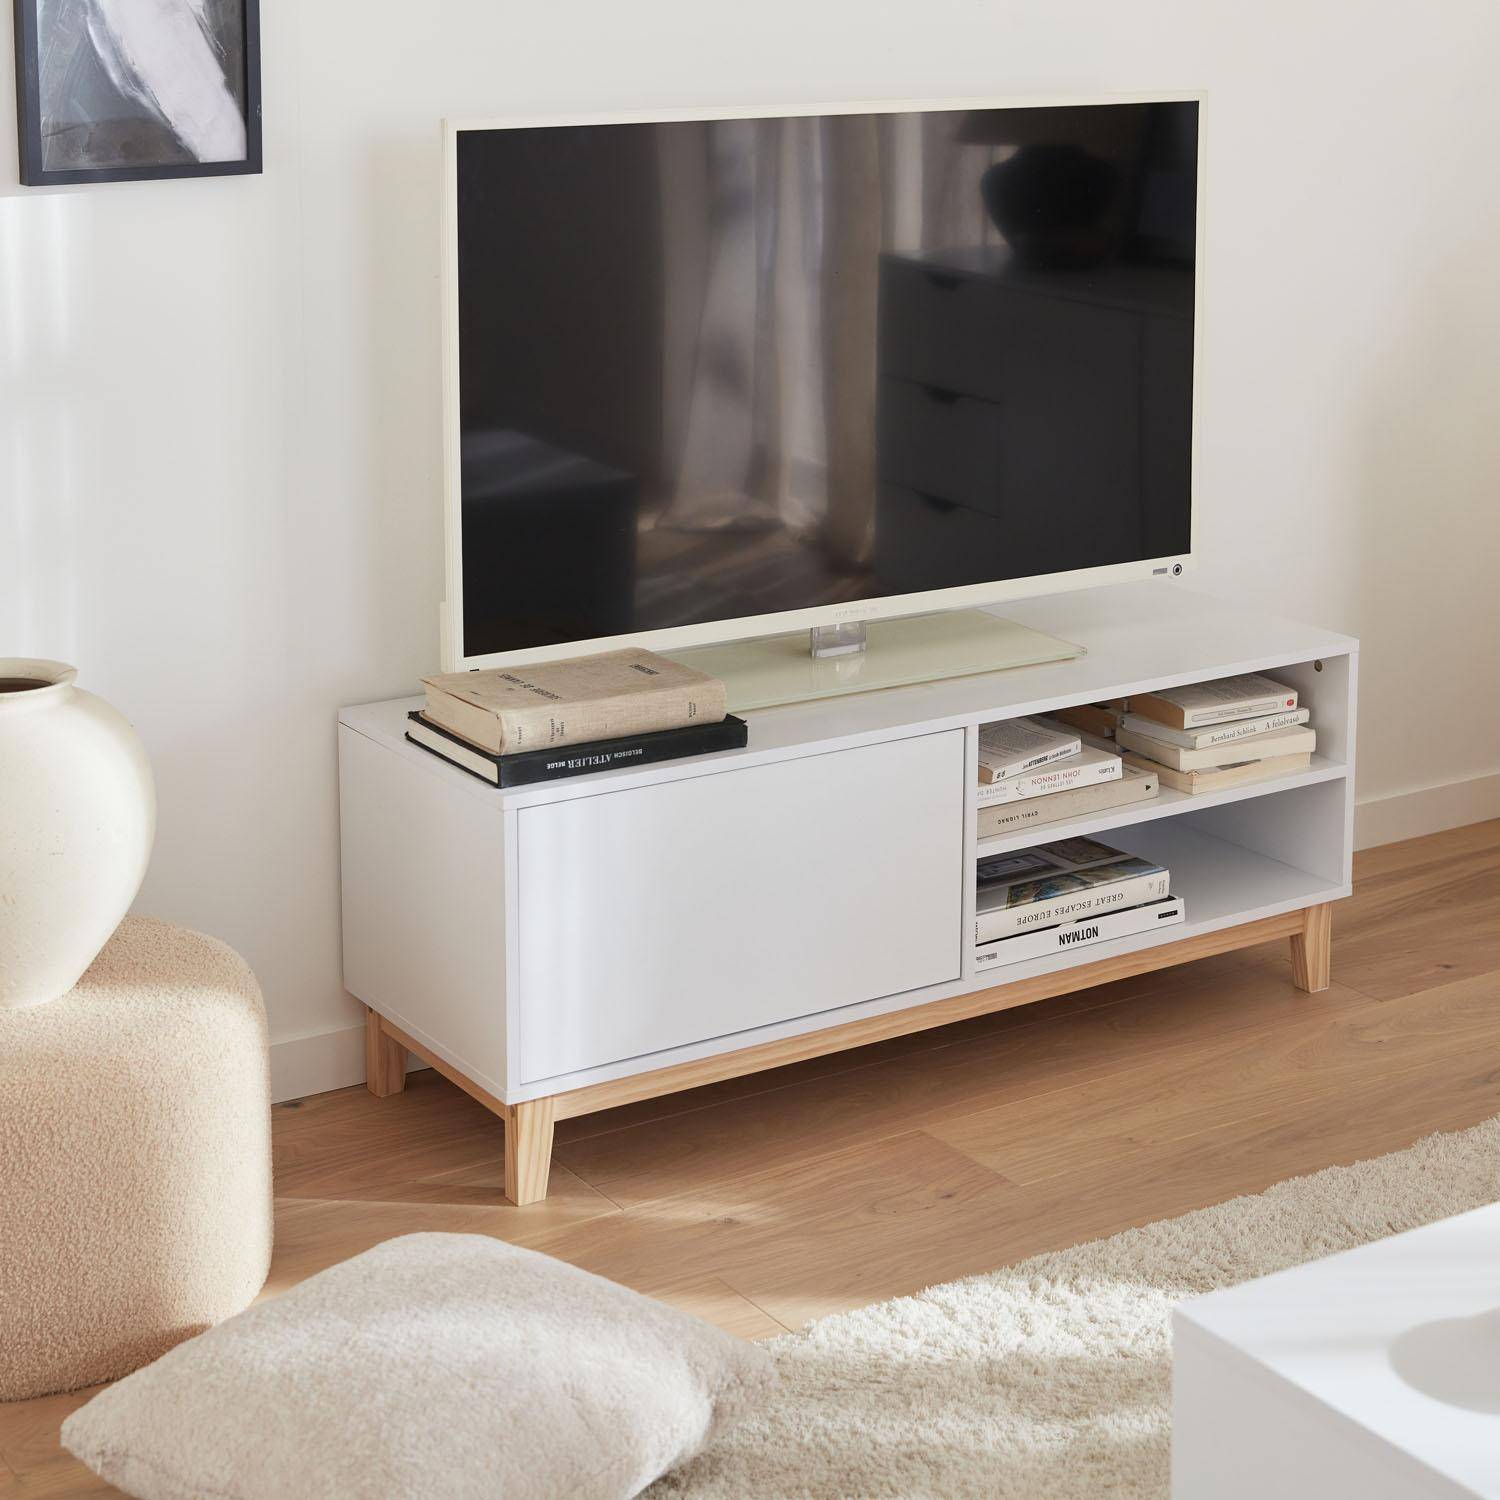 Scandinavian white TV stand - Floki - 1 drawer, fir wood legs, 120x40x45cm Photo1